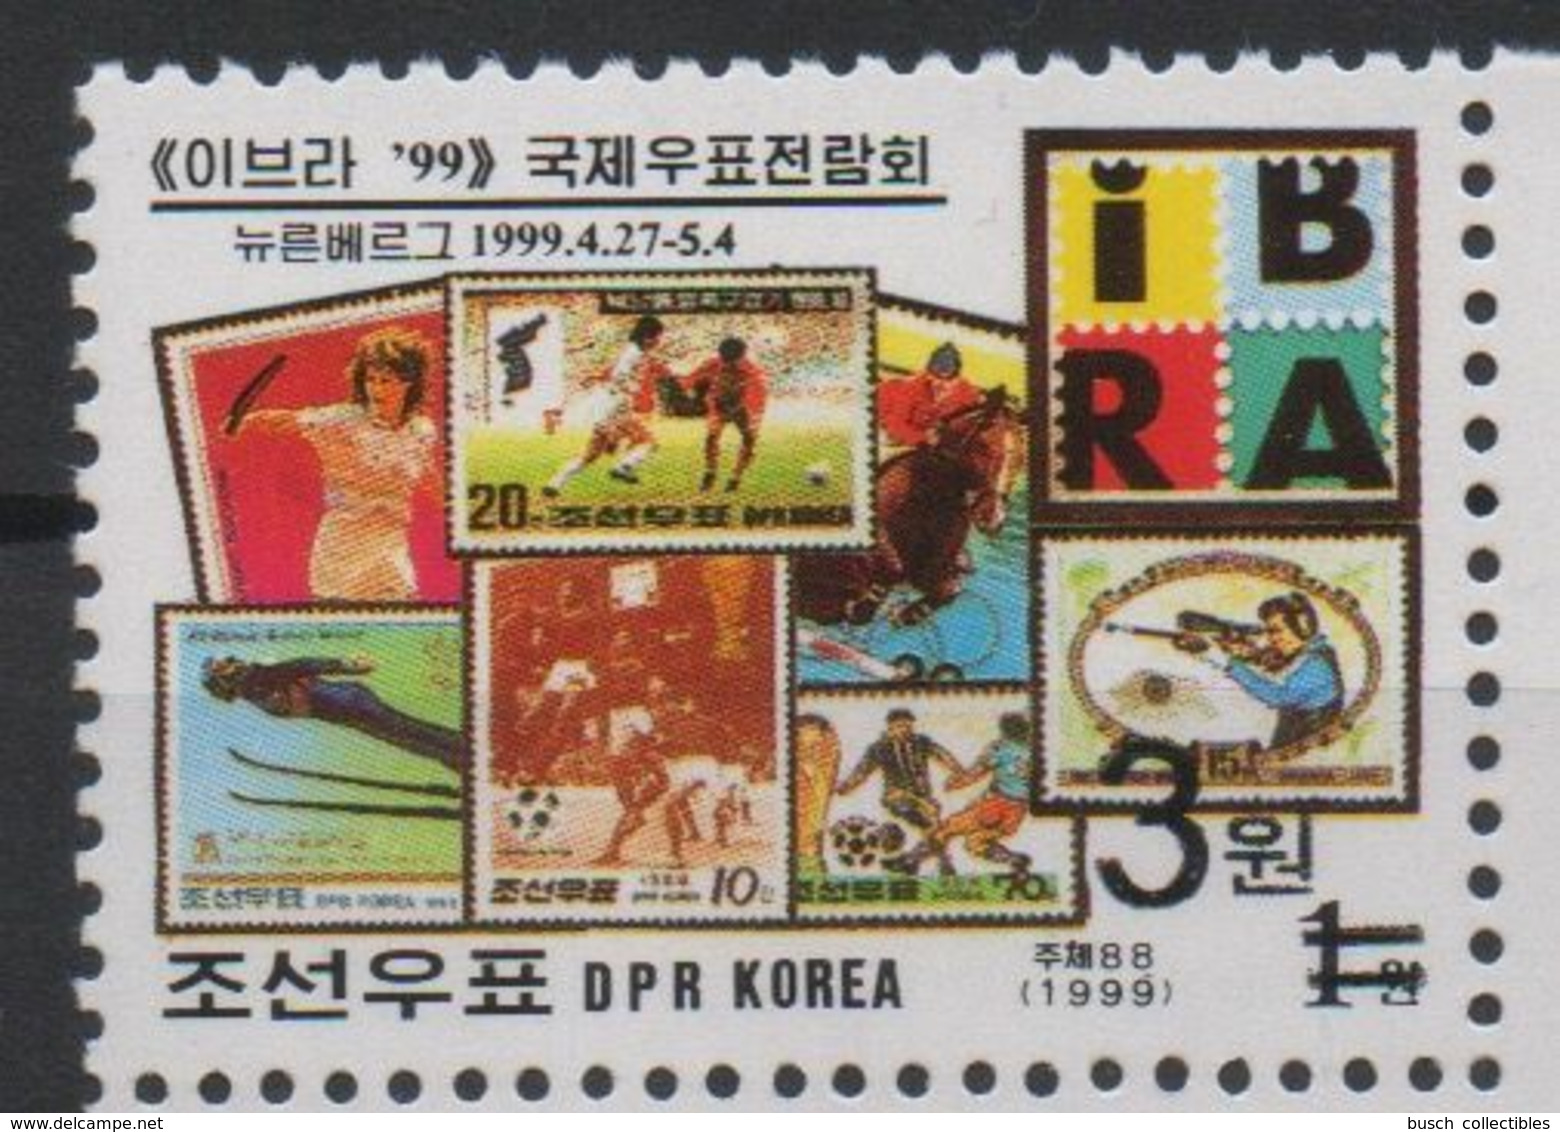 North Korea Corée Du Nord 2006 Mi. 5068 Surchargé OVERPRINT IBRA Nürnberg 1999 Stamp On Stamp Timbre Sur Timbre - Briefmarken Auf Briefmarken